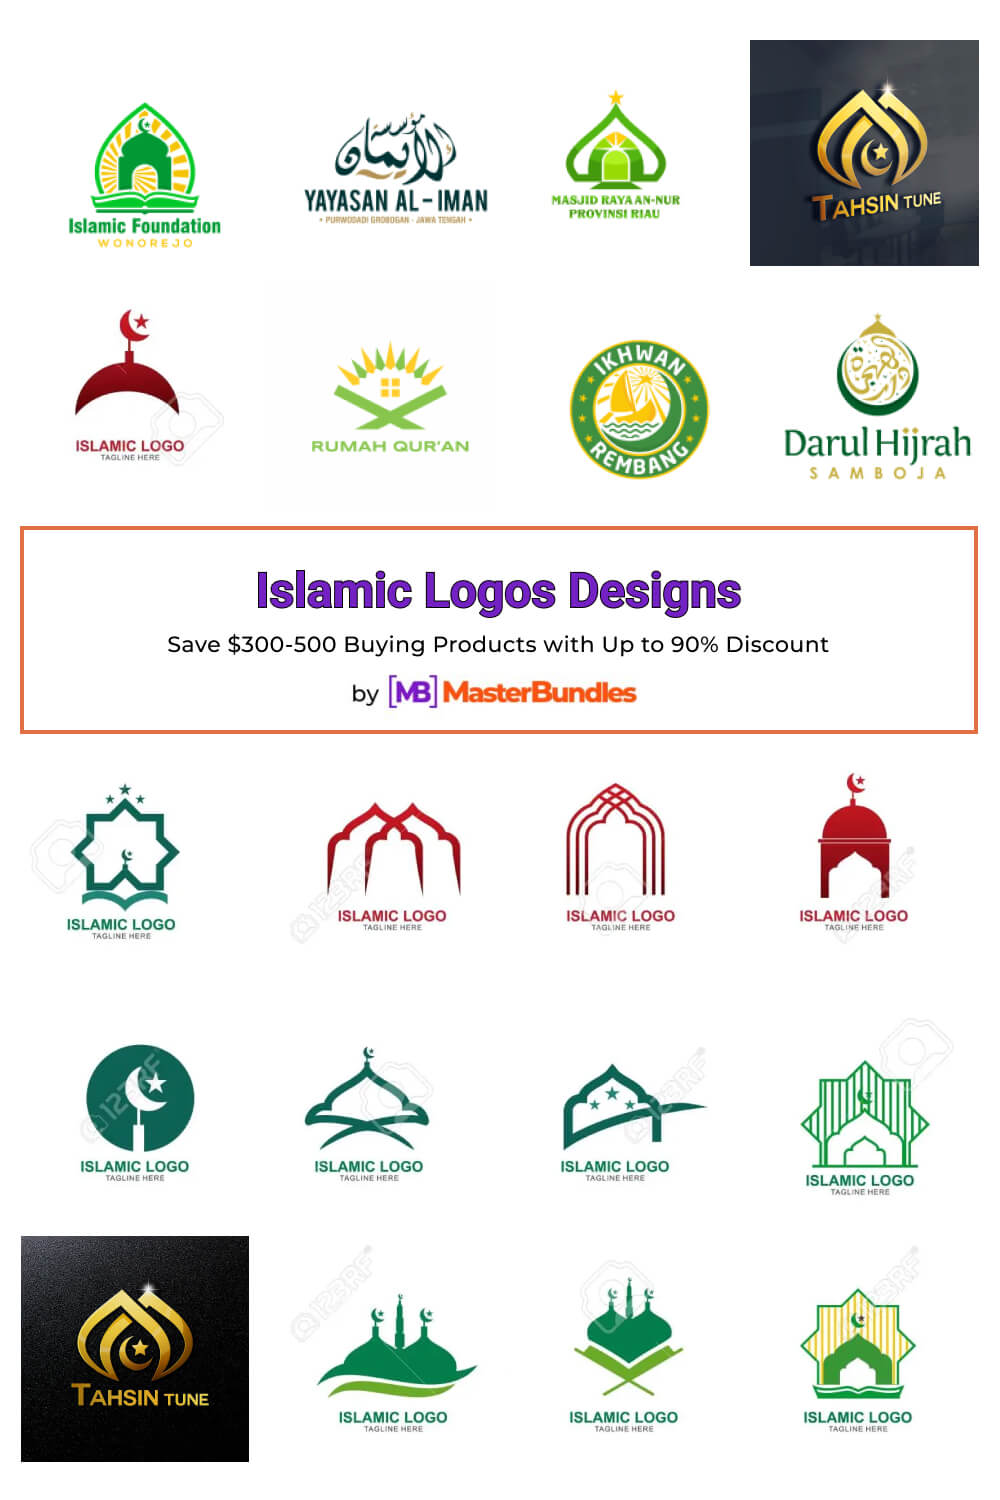 islamic logos designs pinterest image.